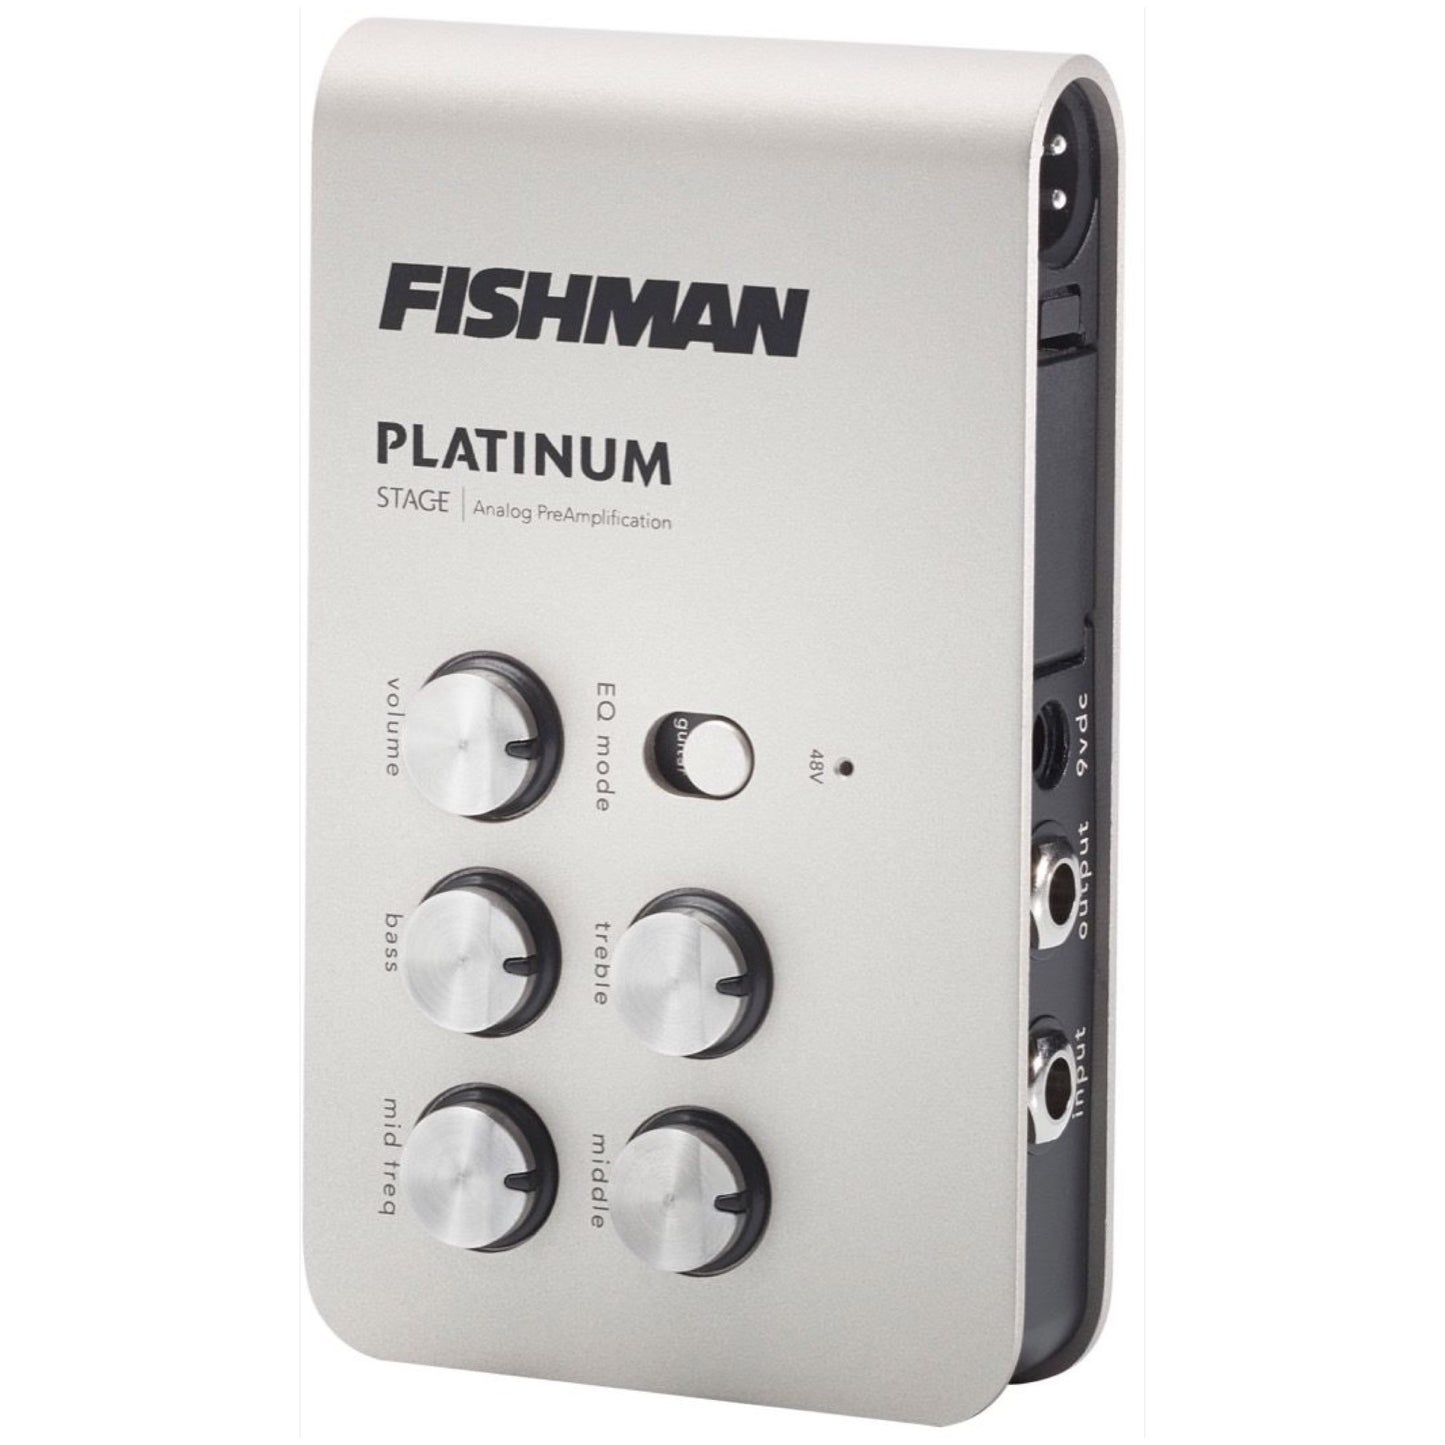 Fishman Platinum Stage EQ Analog Preamp Pedal